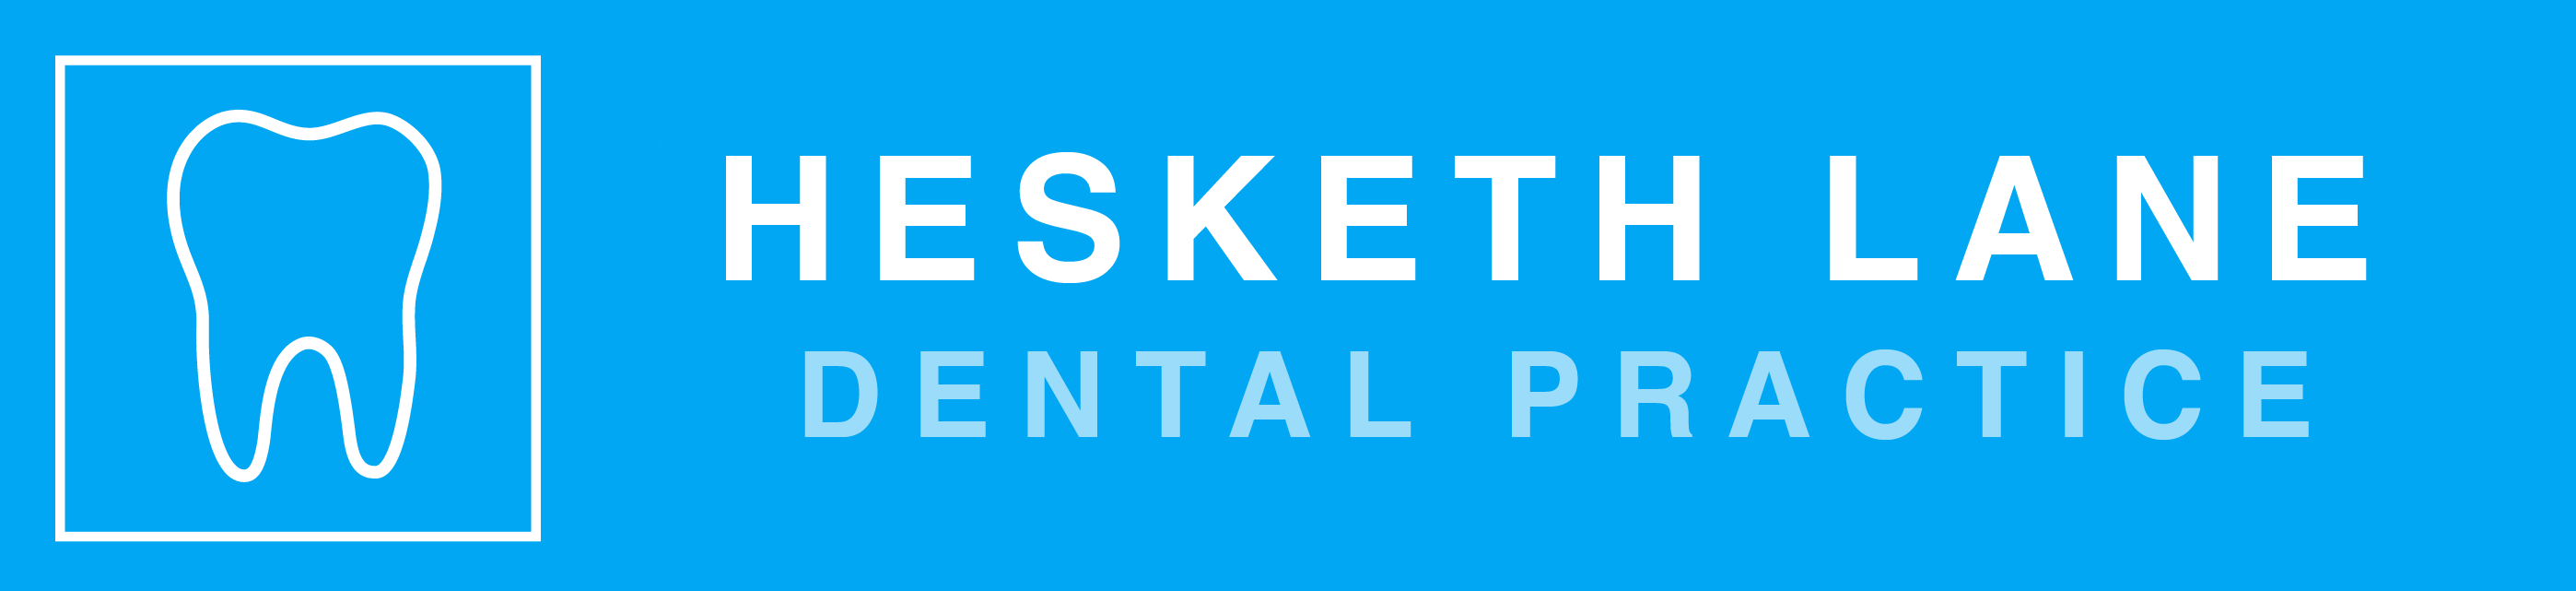 Hesketh Lane Dental Practice